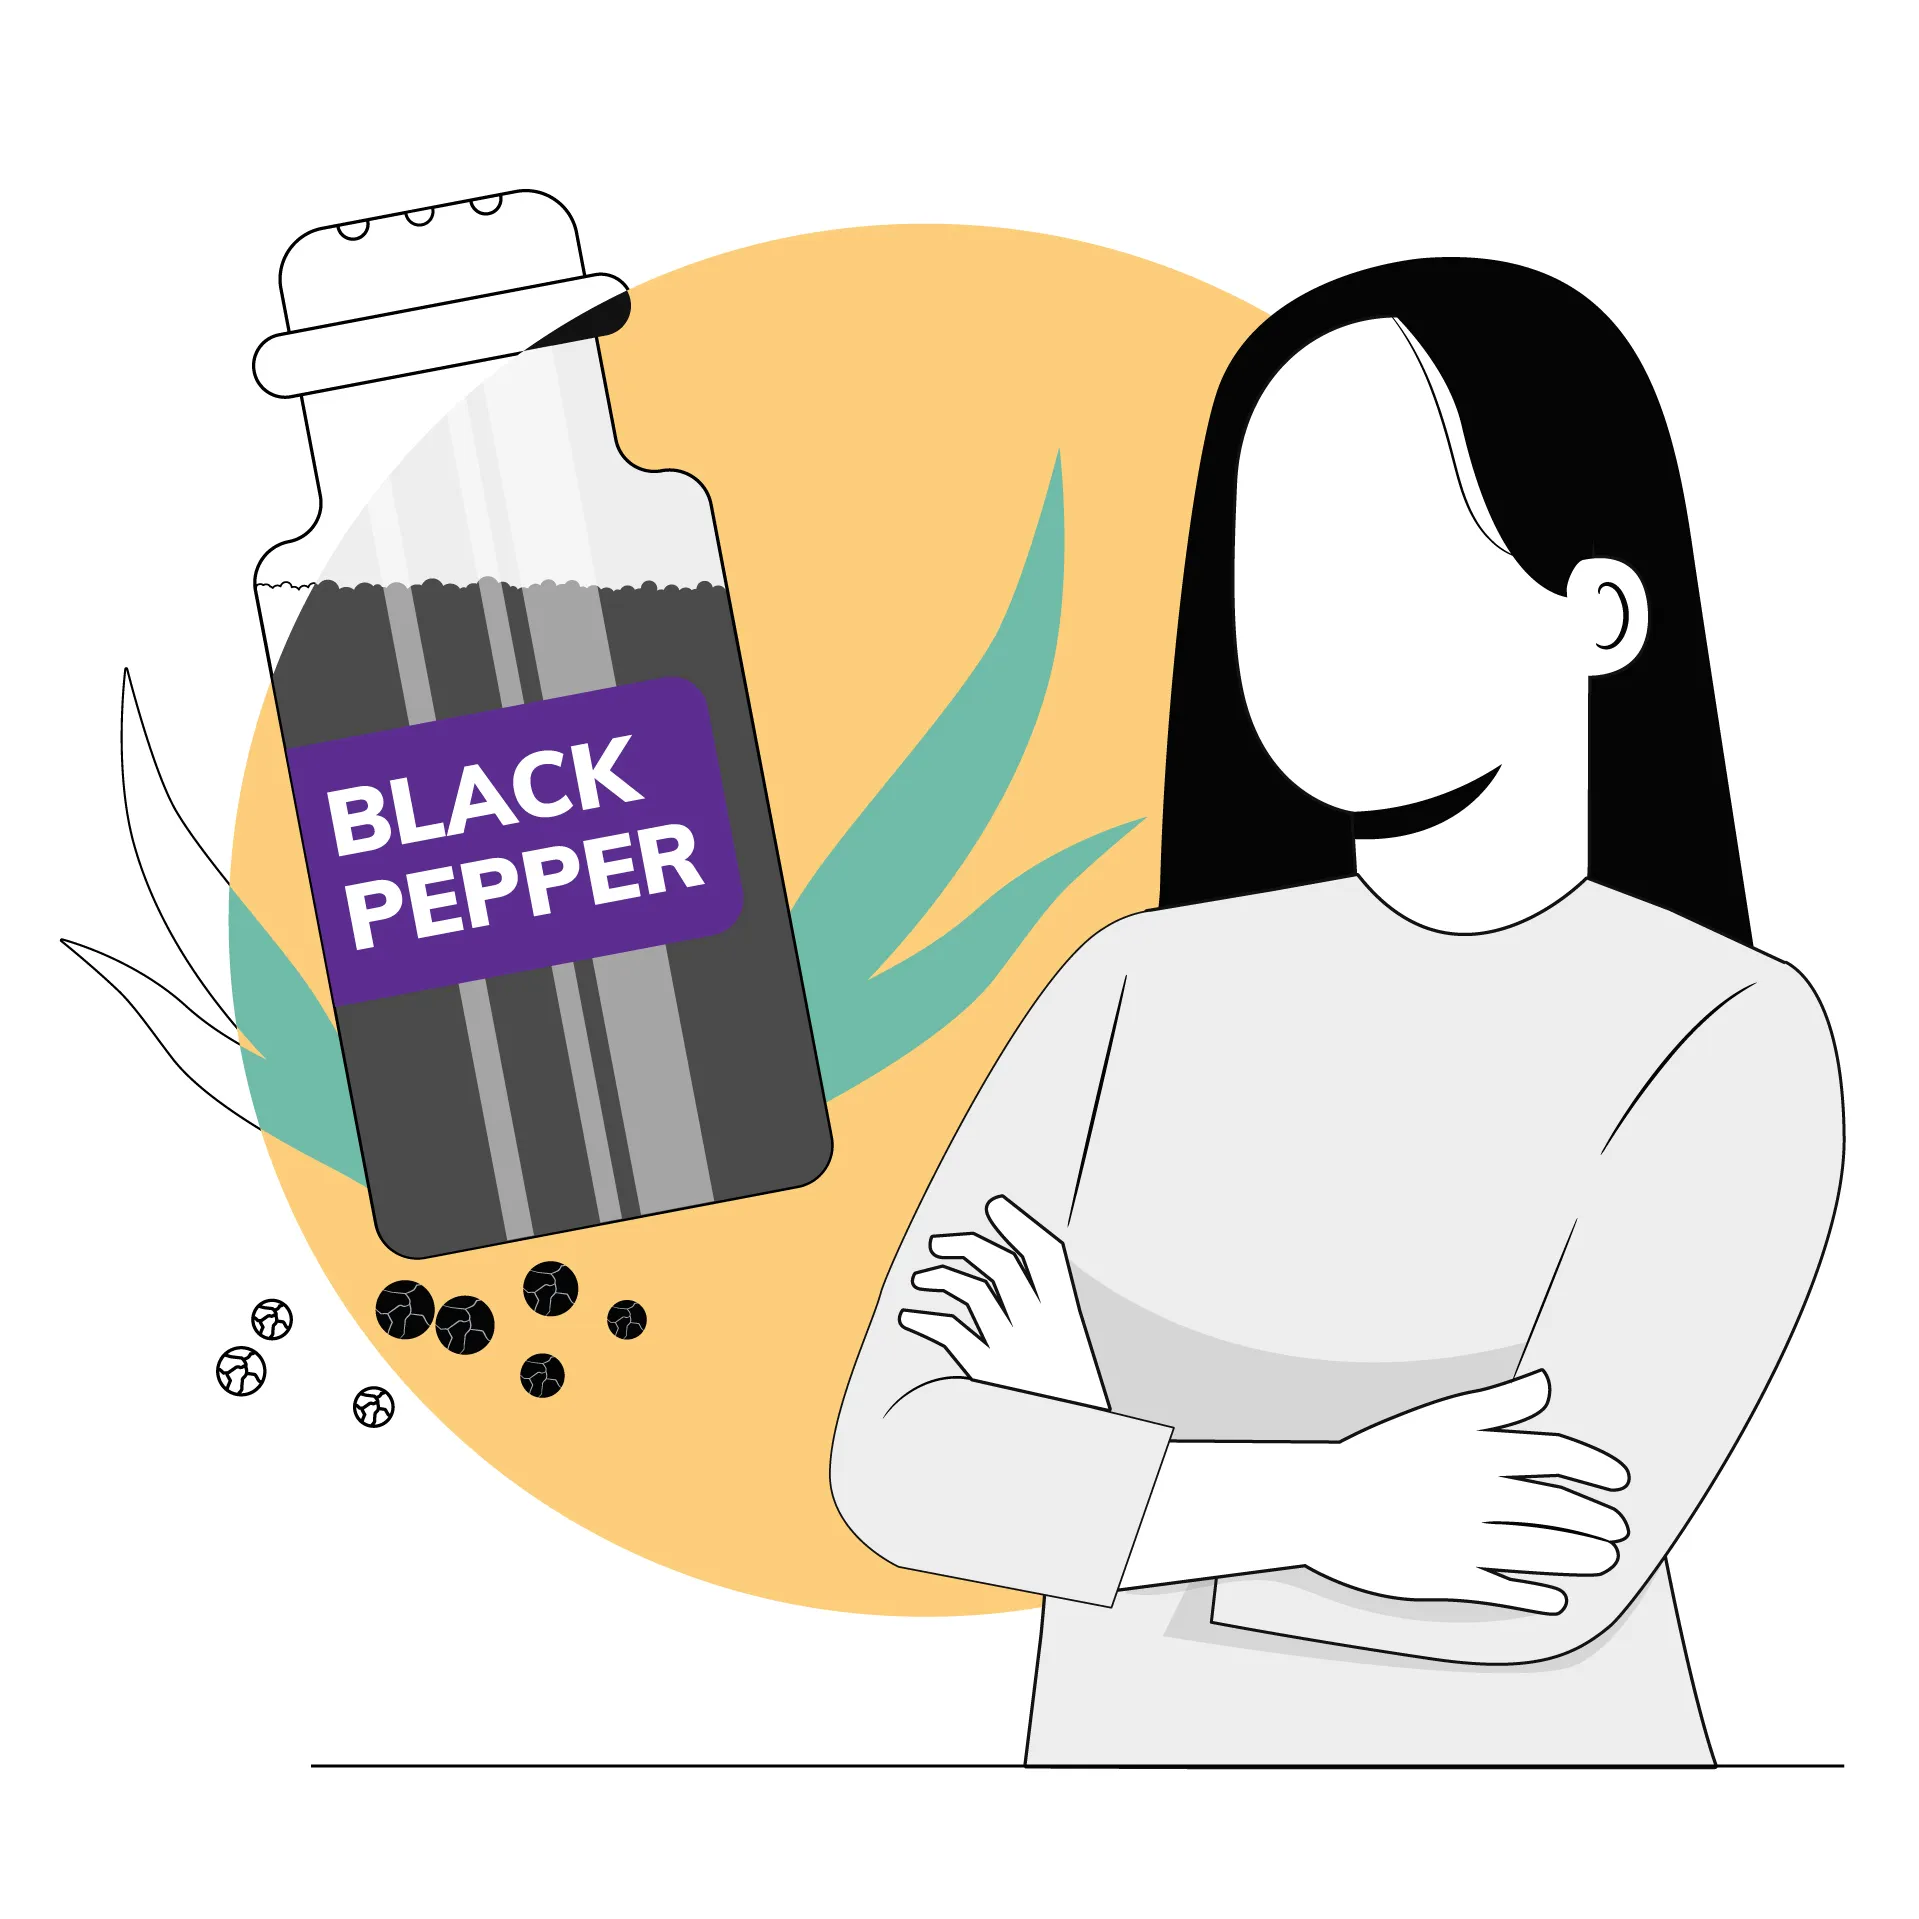 Black Pepper benefits